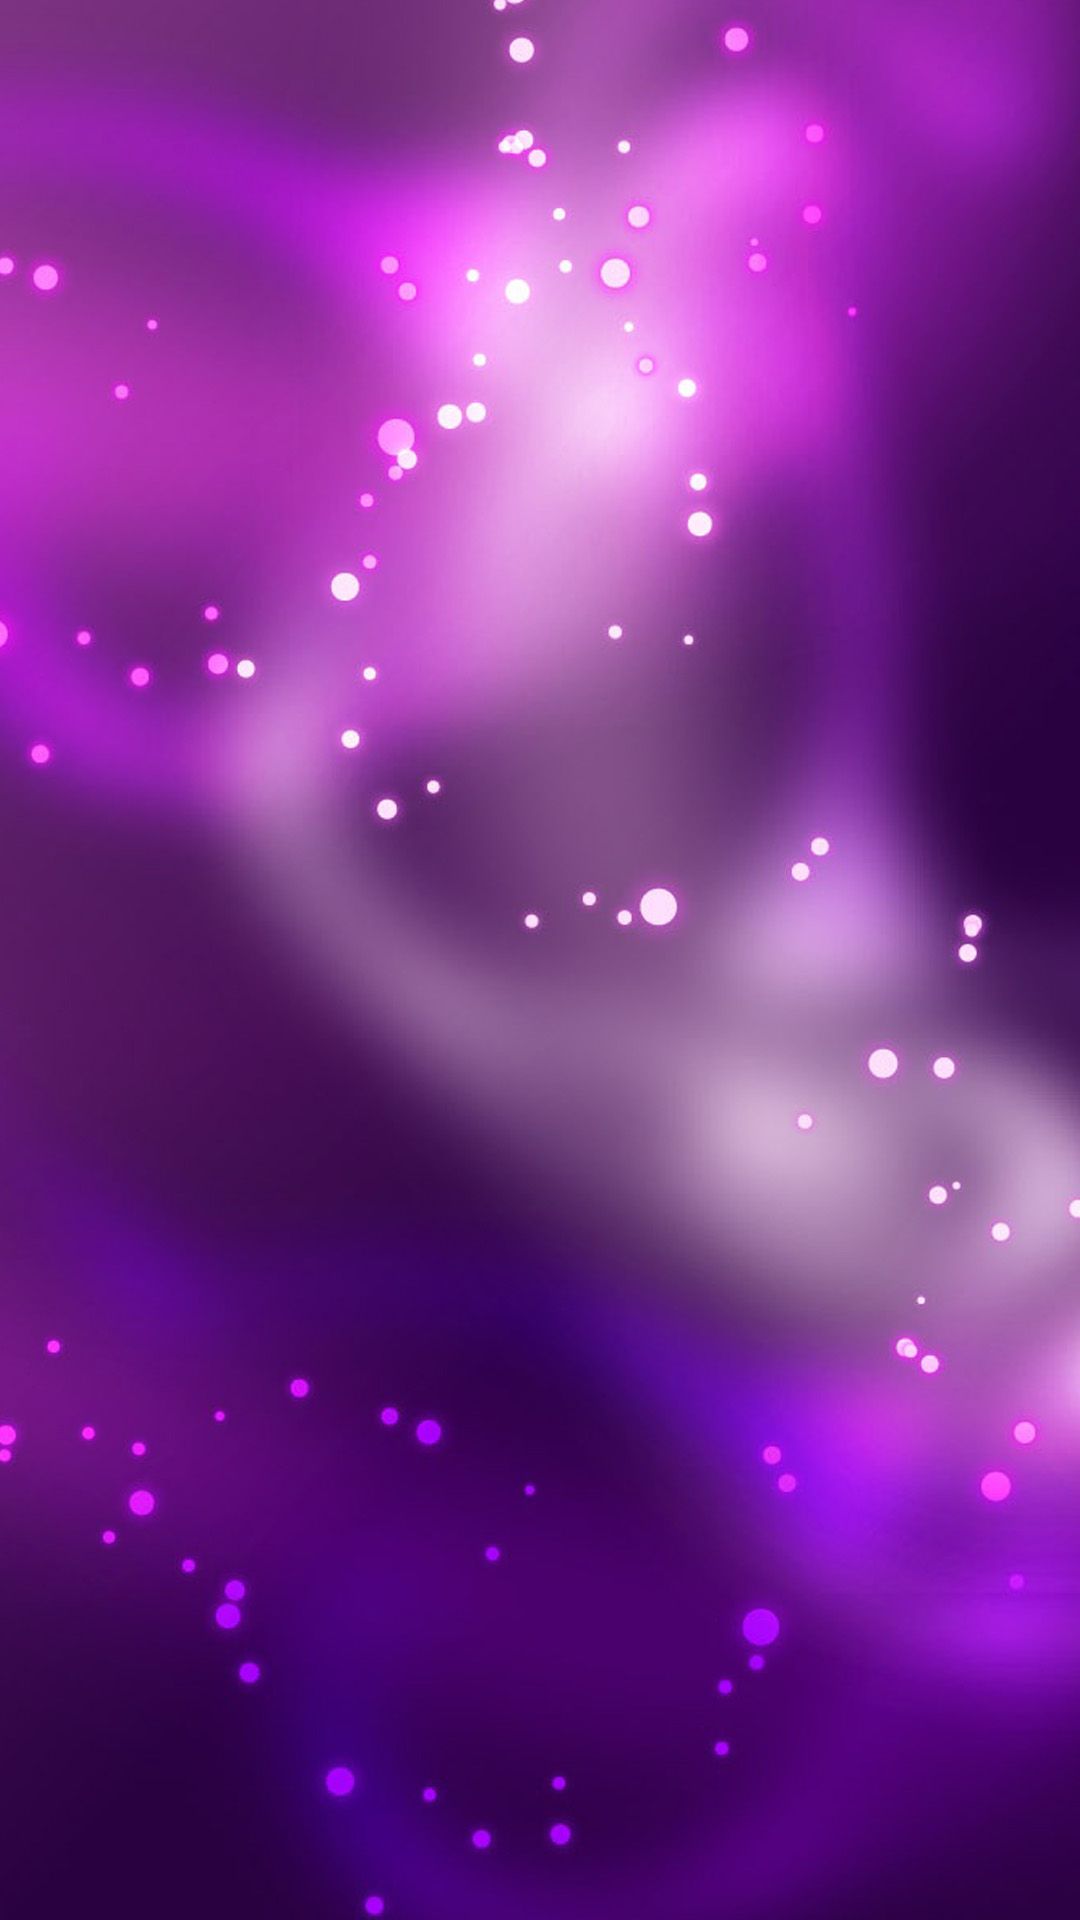 galaxy mobile wallpaper,violet,purple,pink,light,lilac